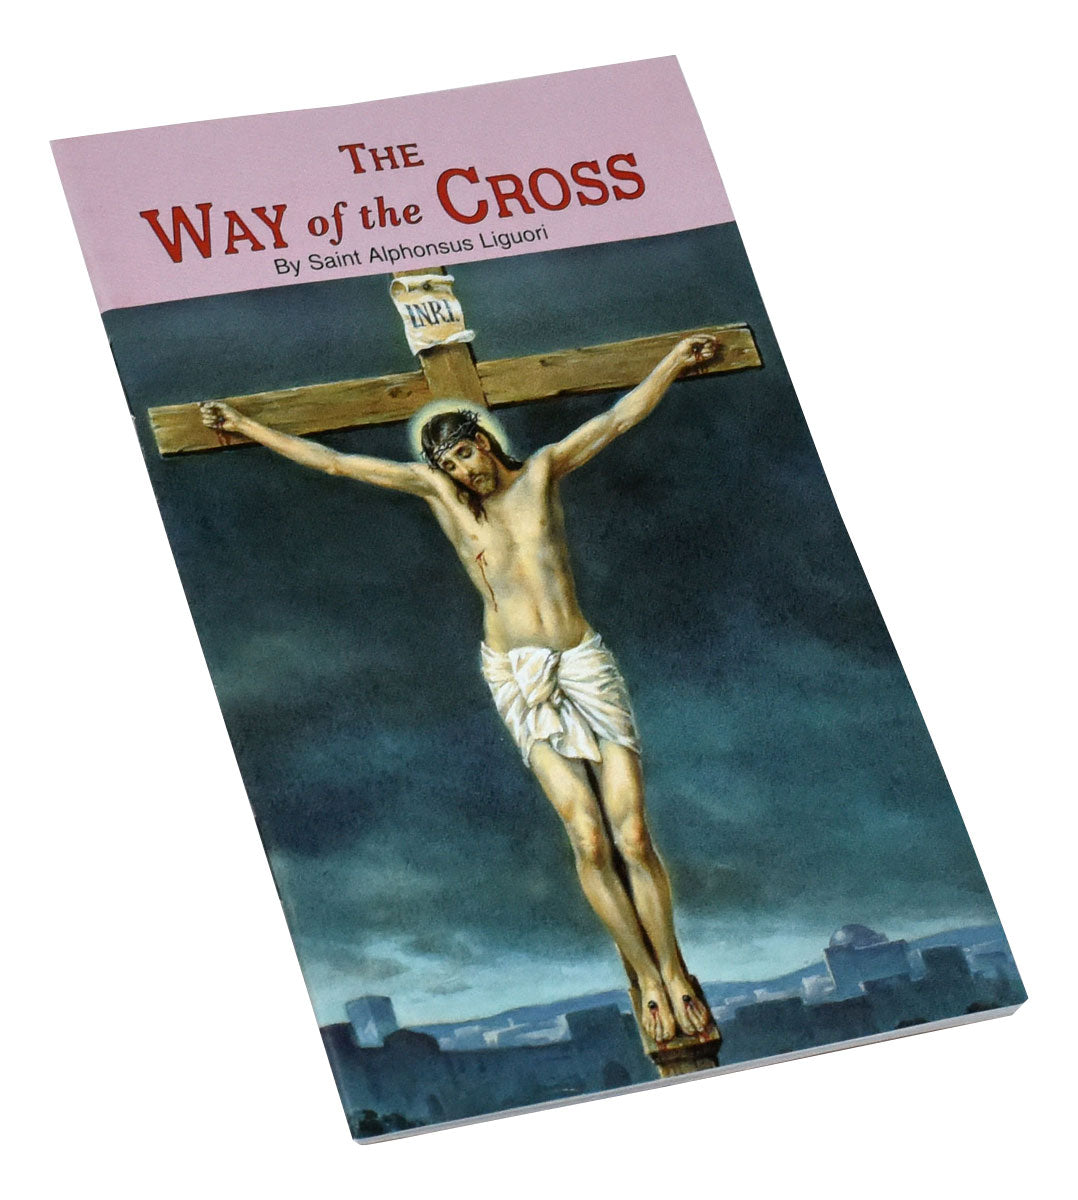 Way Of The Cross by Saint Alphonsus Liguori